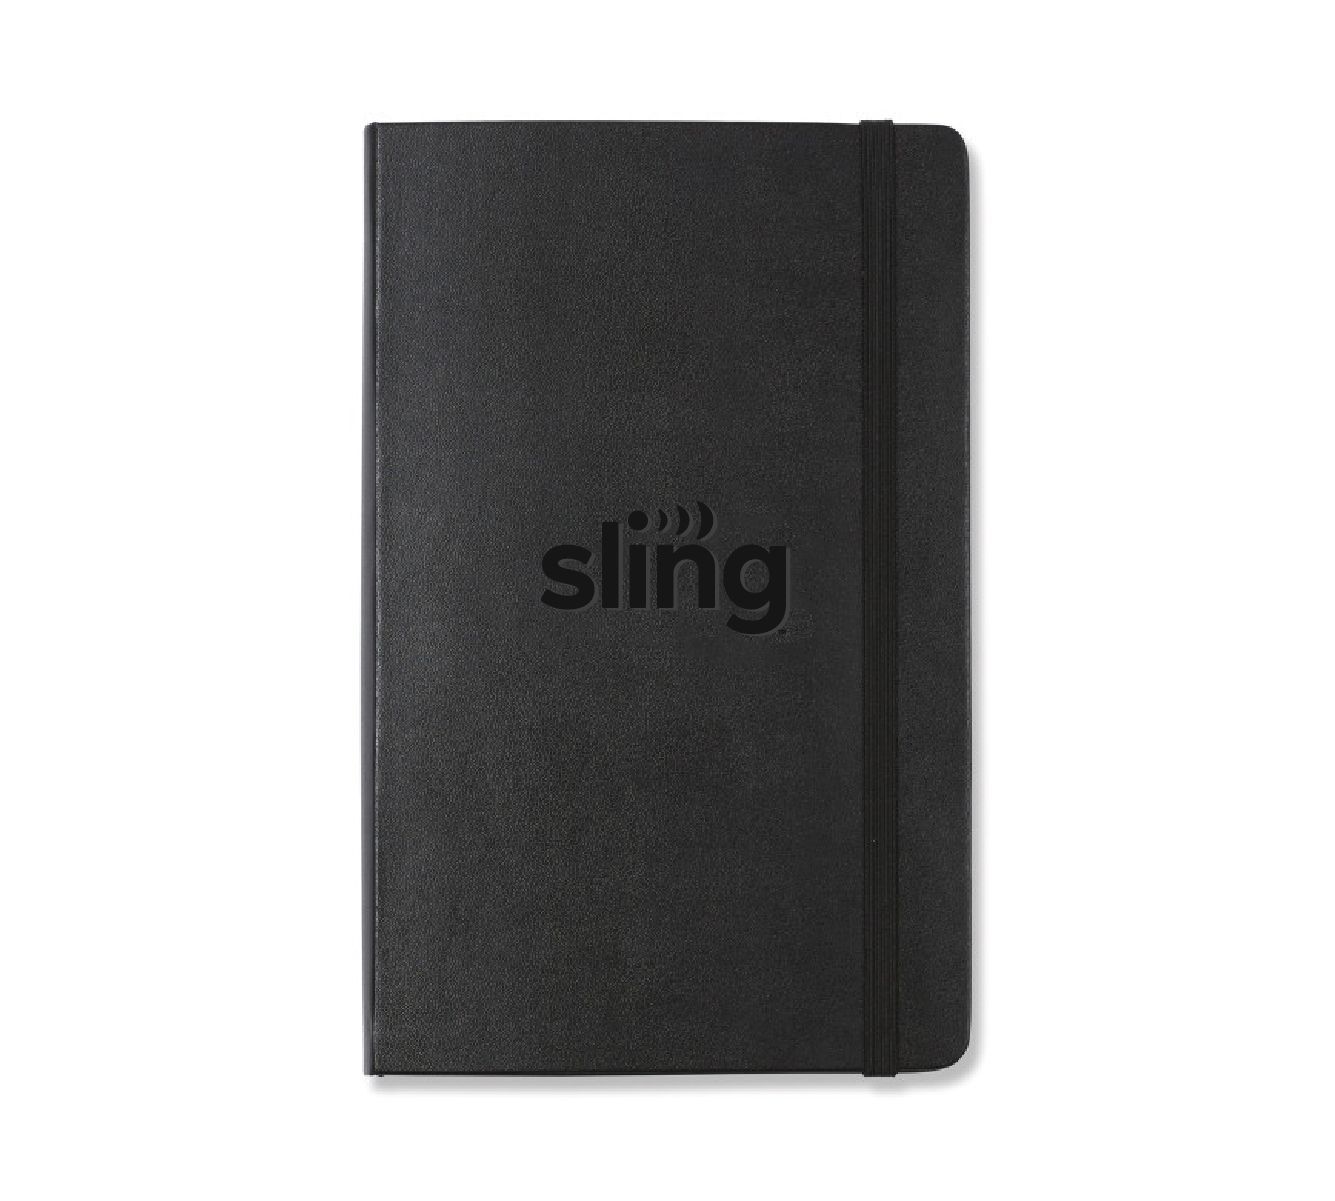 Moleskine Hard Cover Ruled Large Notebook with Sling Logo